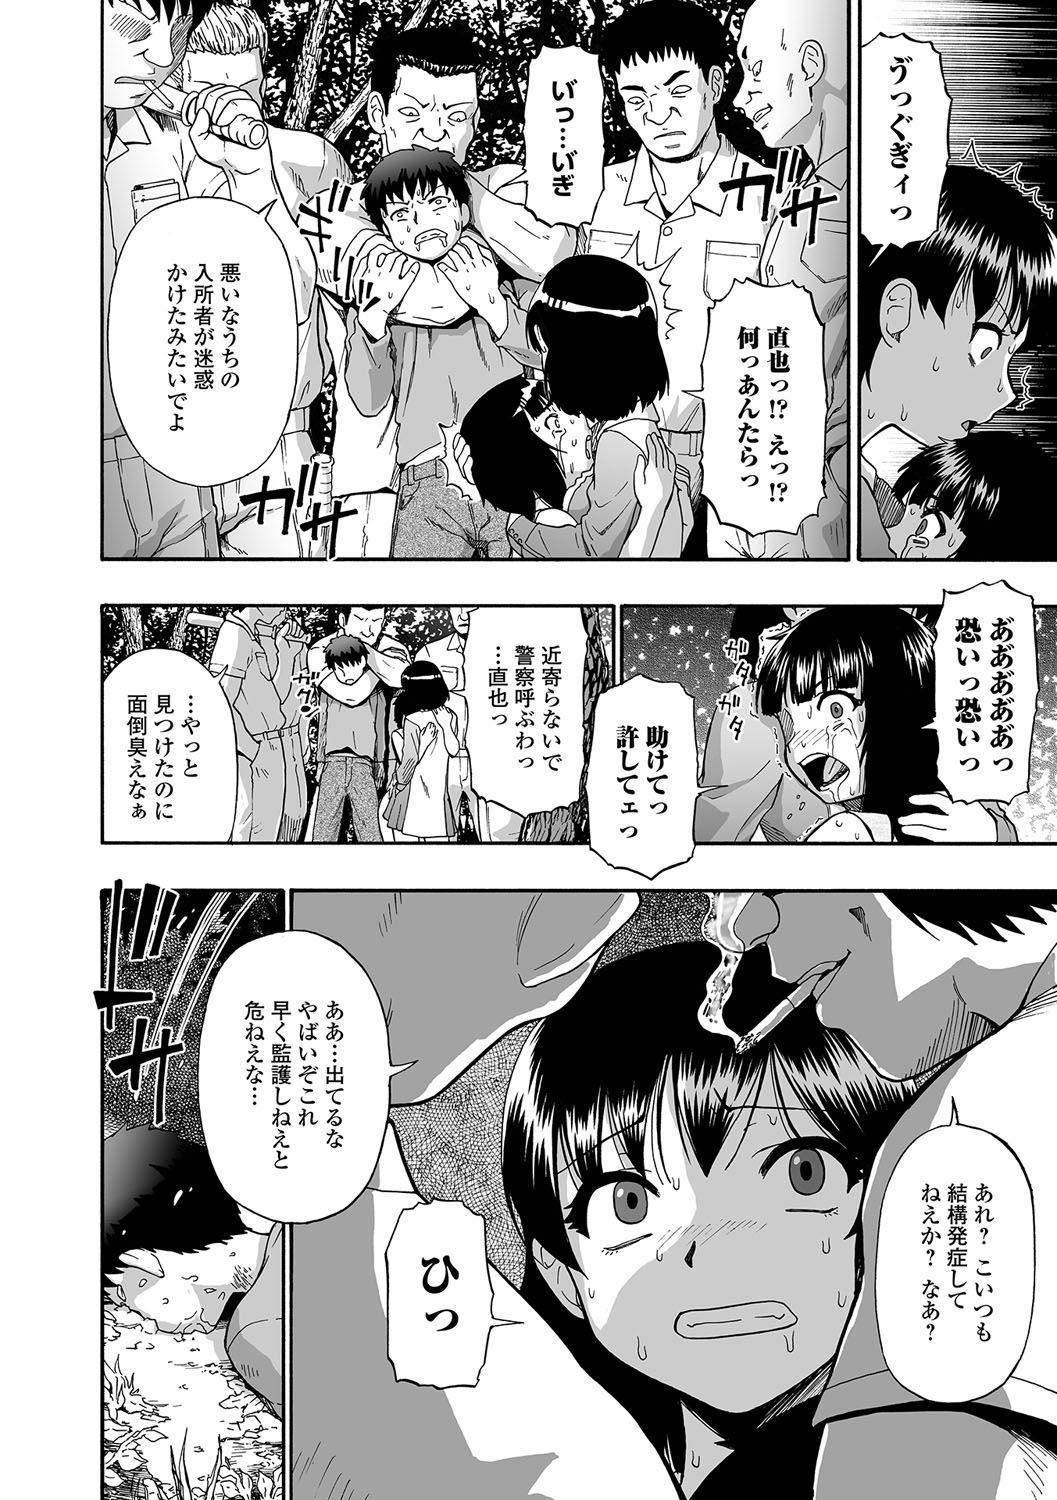 Interacial Gusha no Ishi 8teenxxx - Page 8